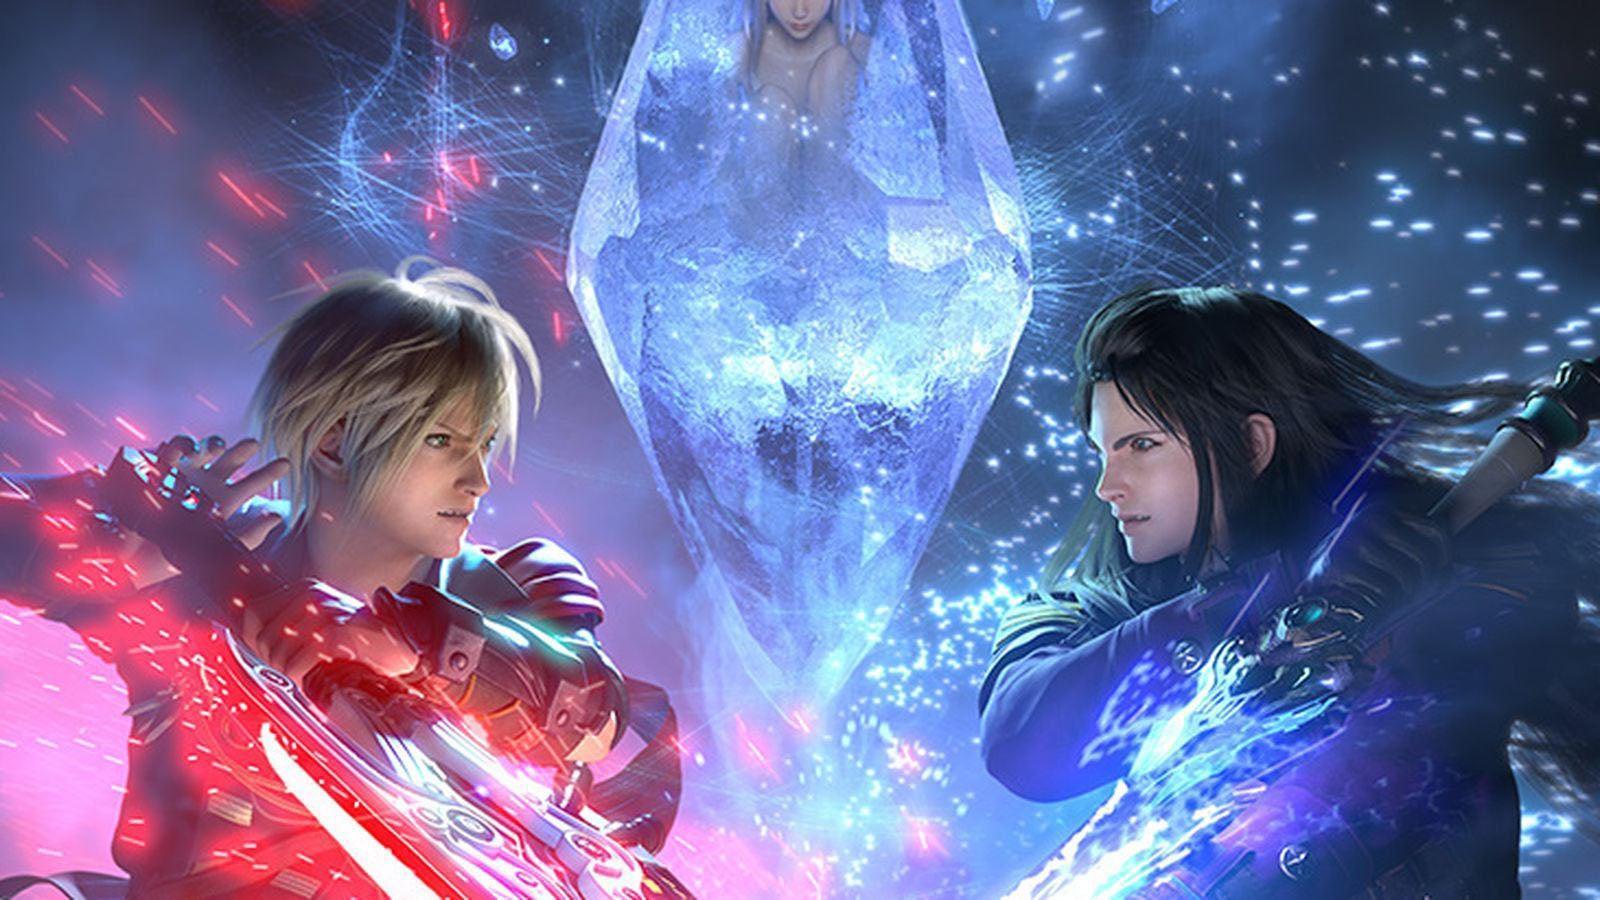 The 'Final Fantasy XV' bromobile invades 'Forza Horizon 3' next week